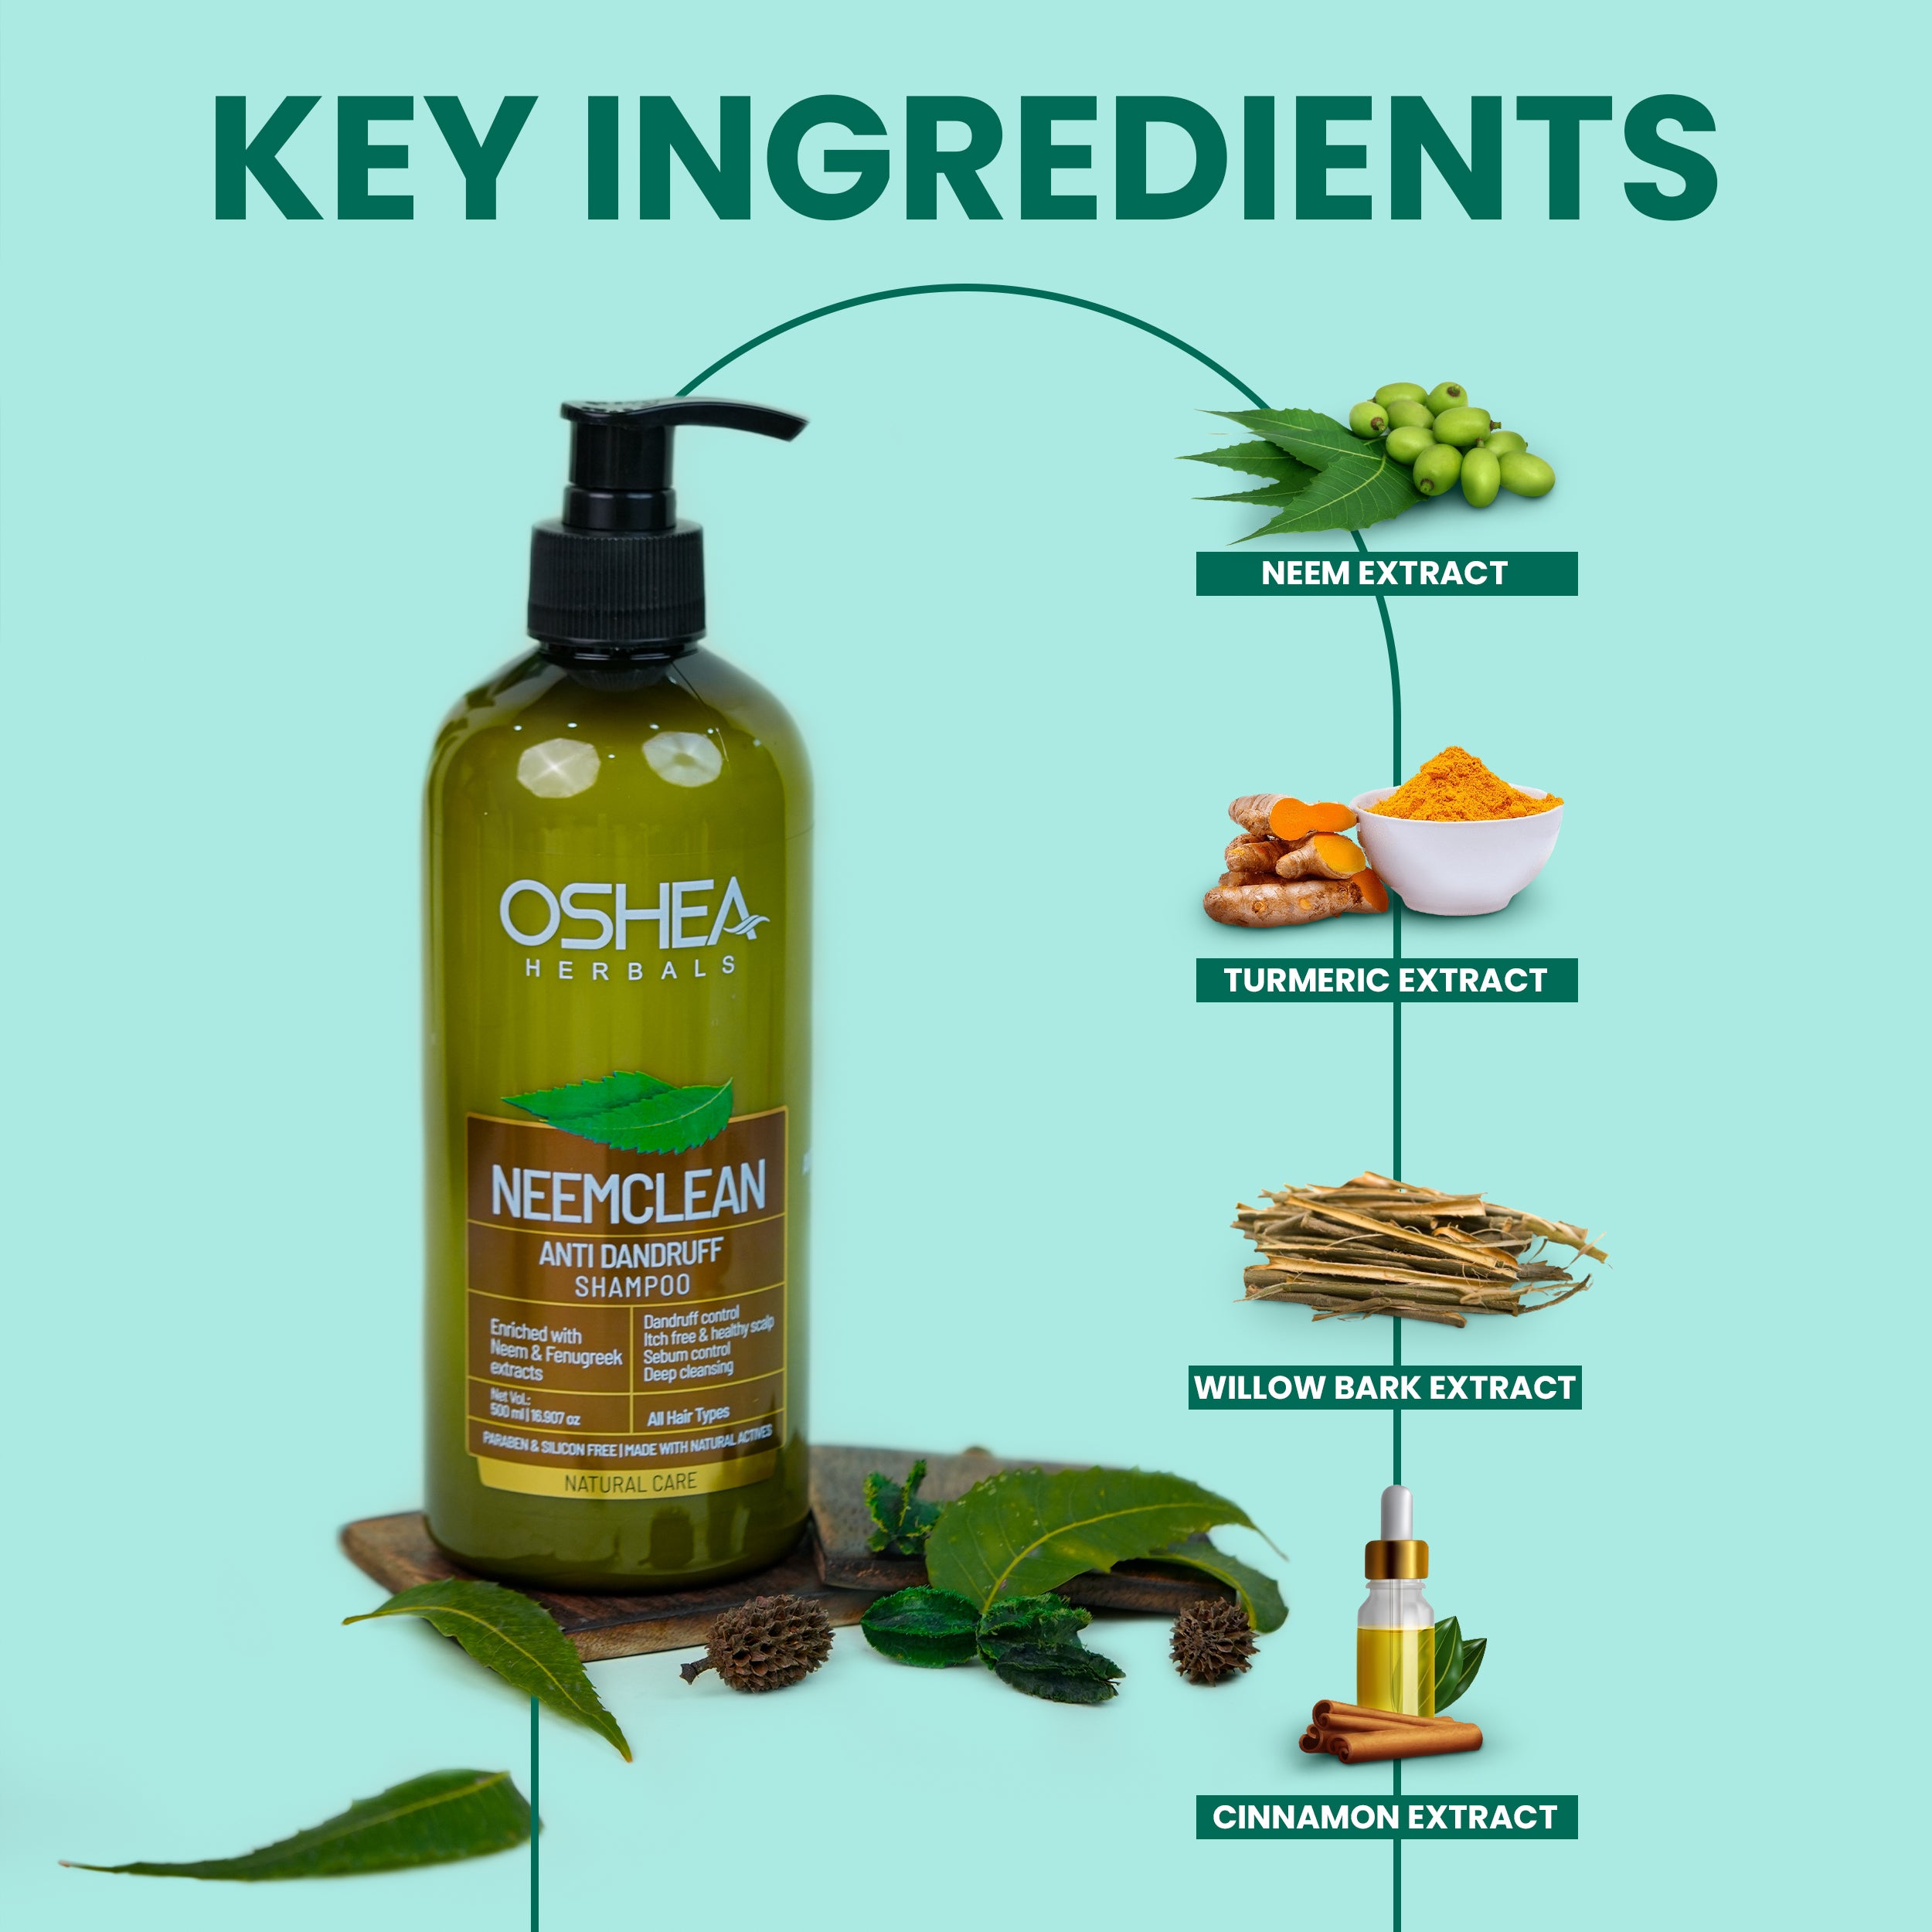 Key ingredients Neemclean Anti dandruff Shampoo Oshea Herbals